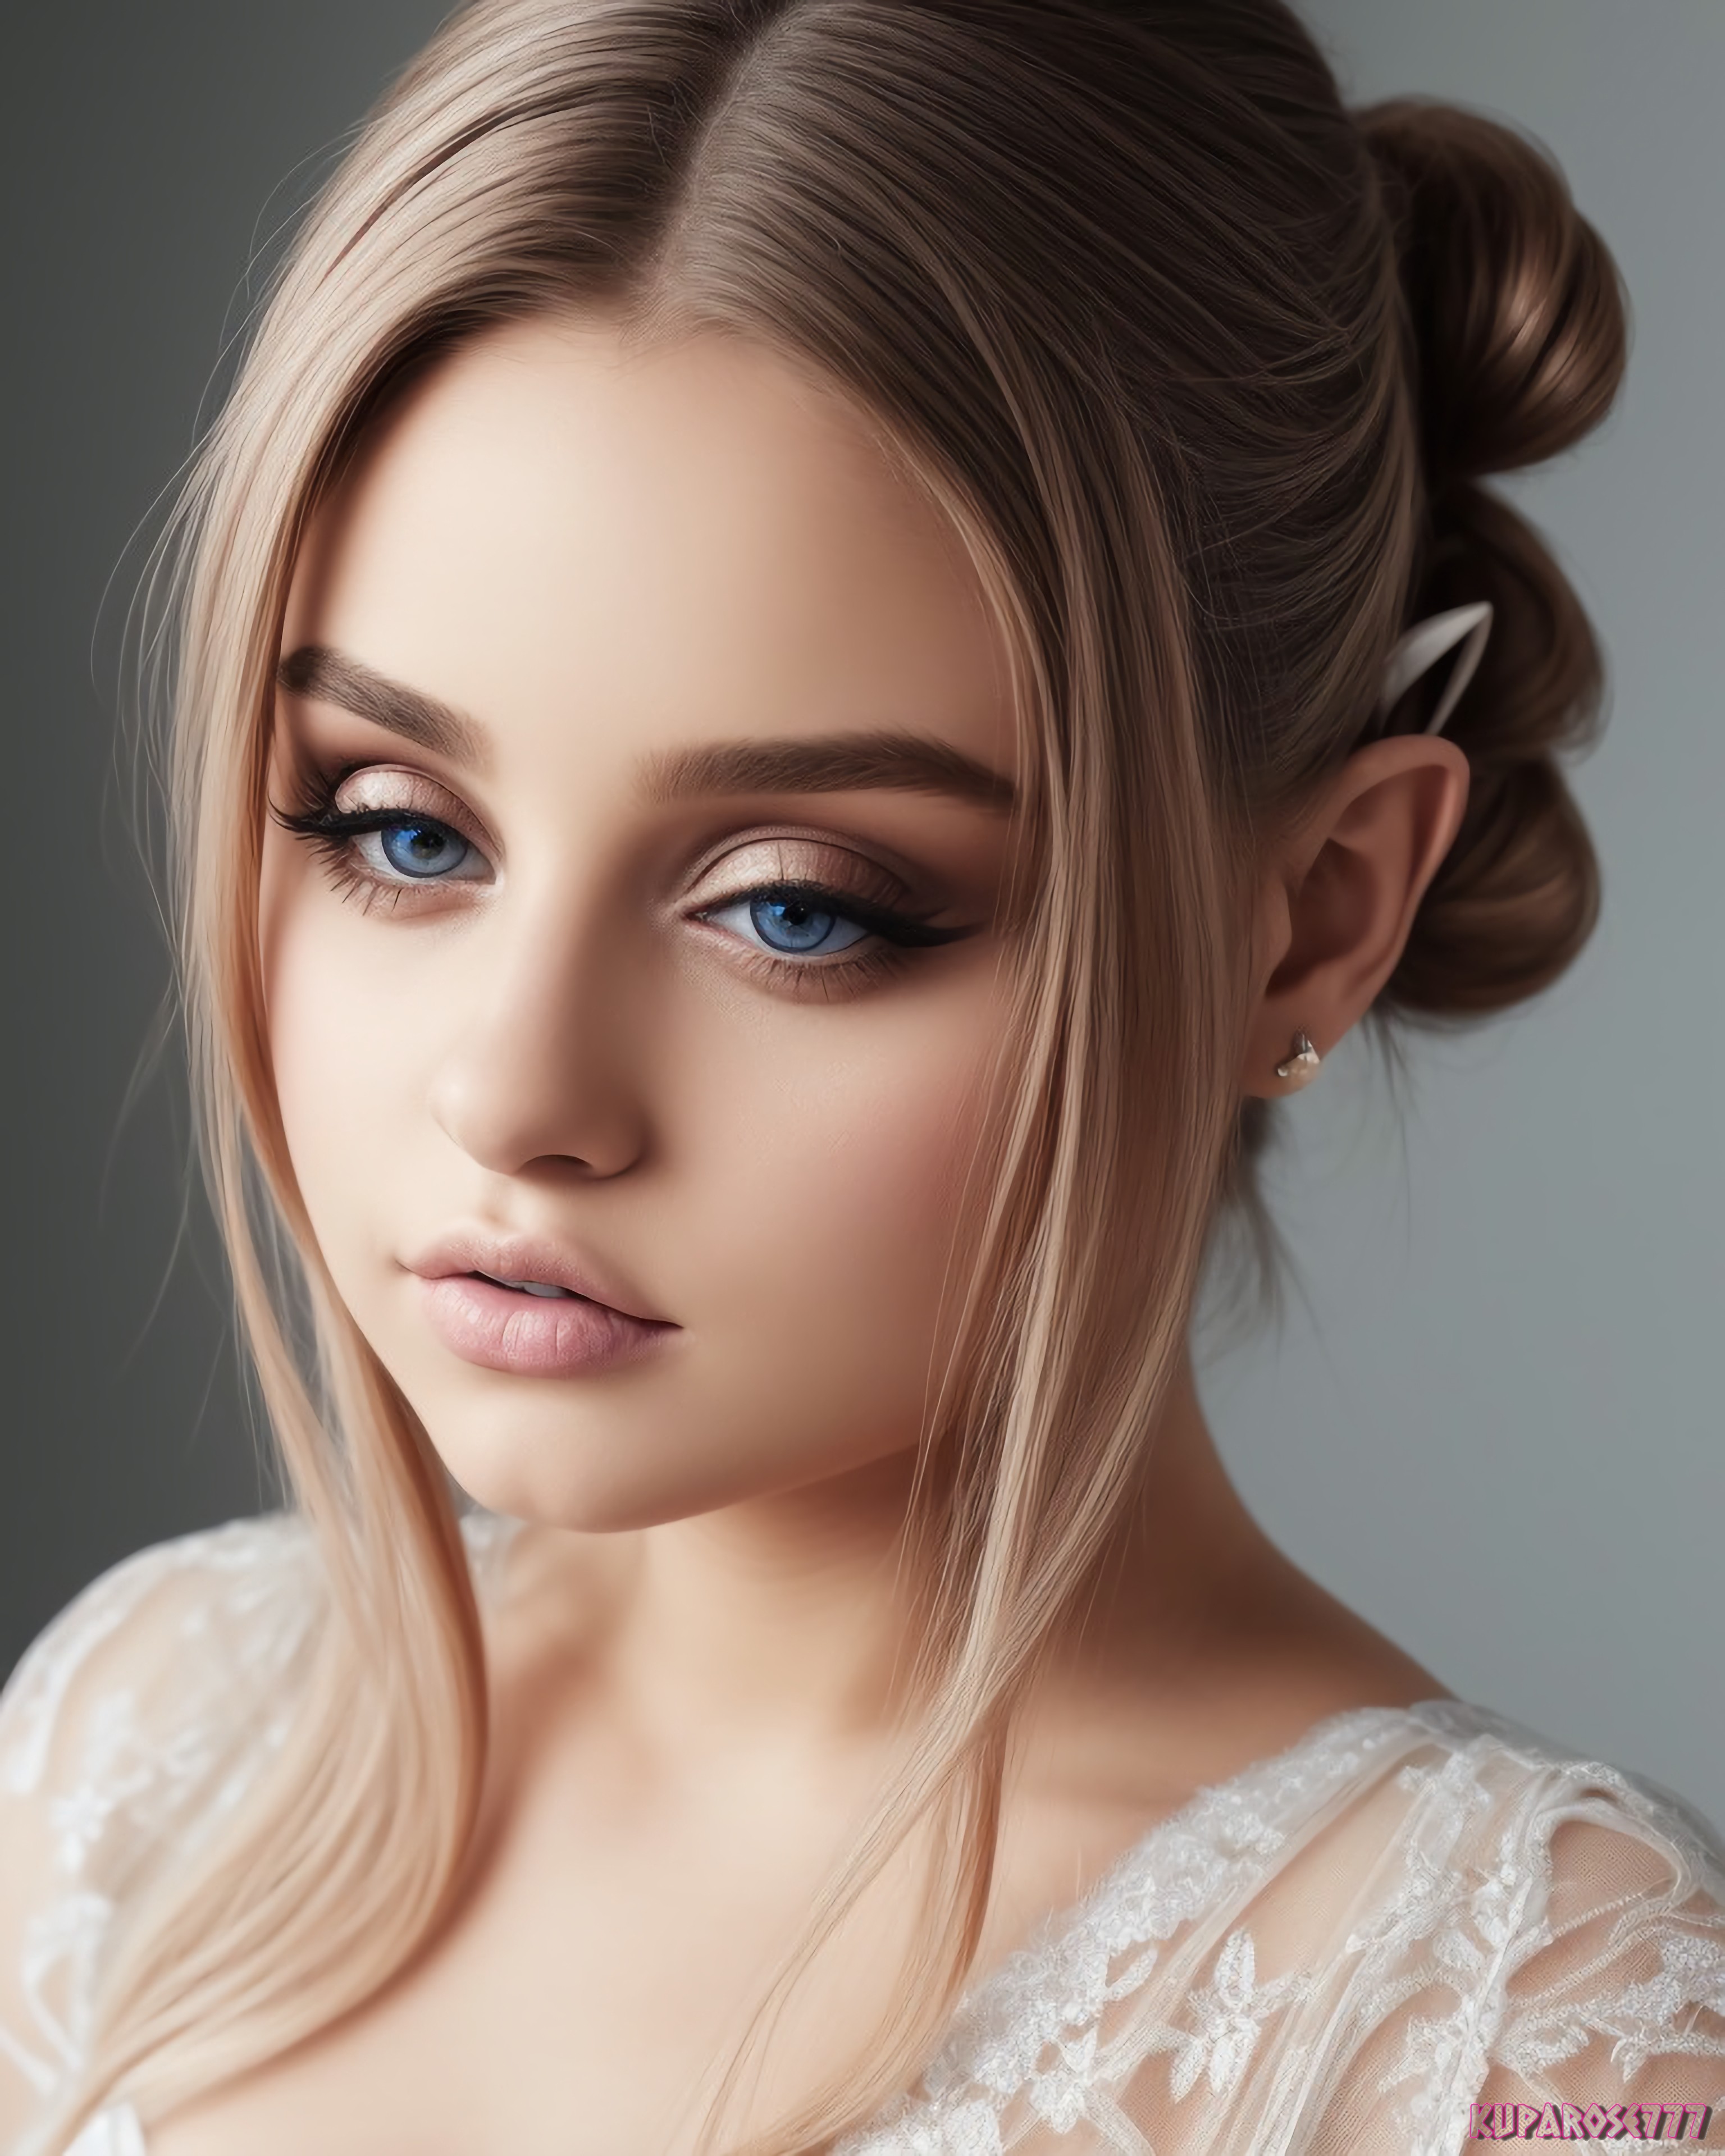 Fancy makeup by QuQ7 on DeviantArt